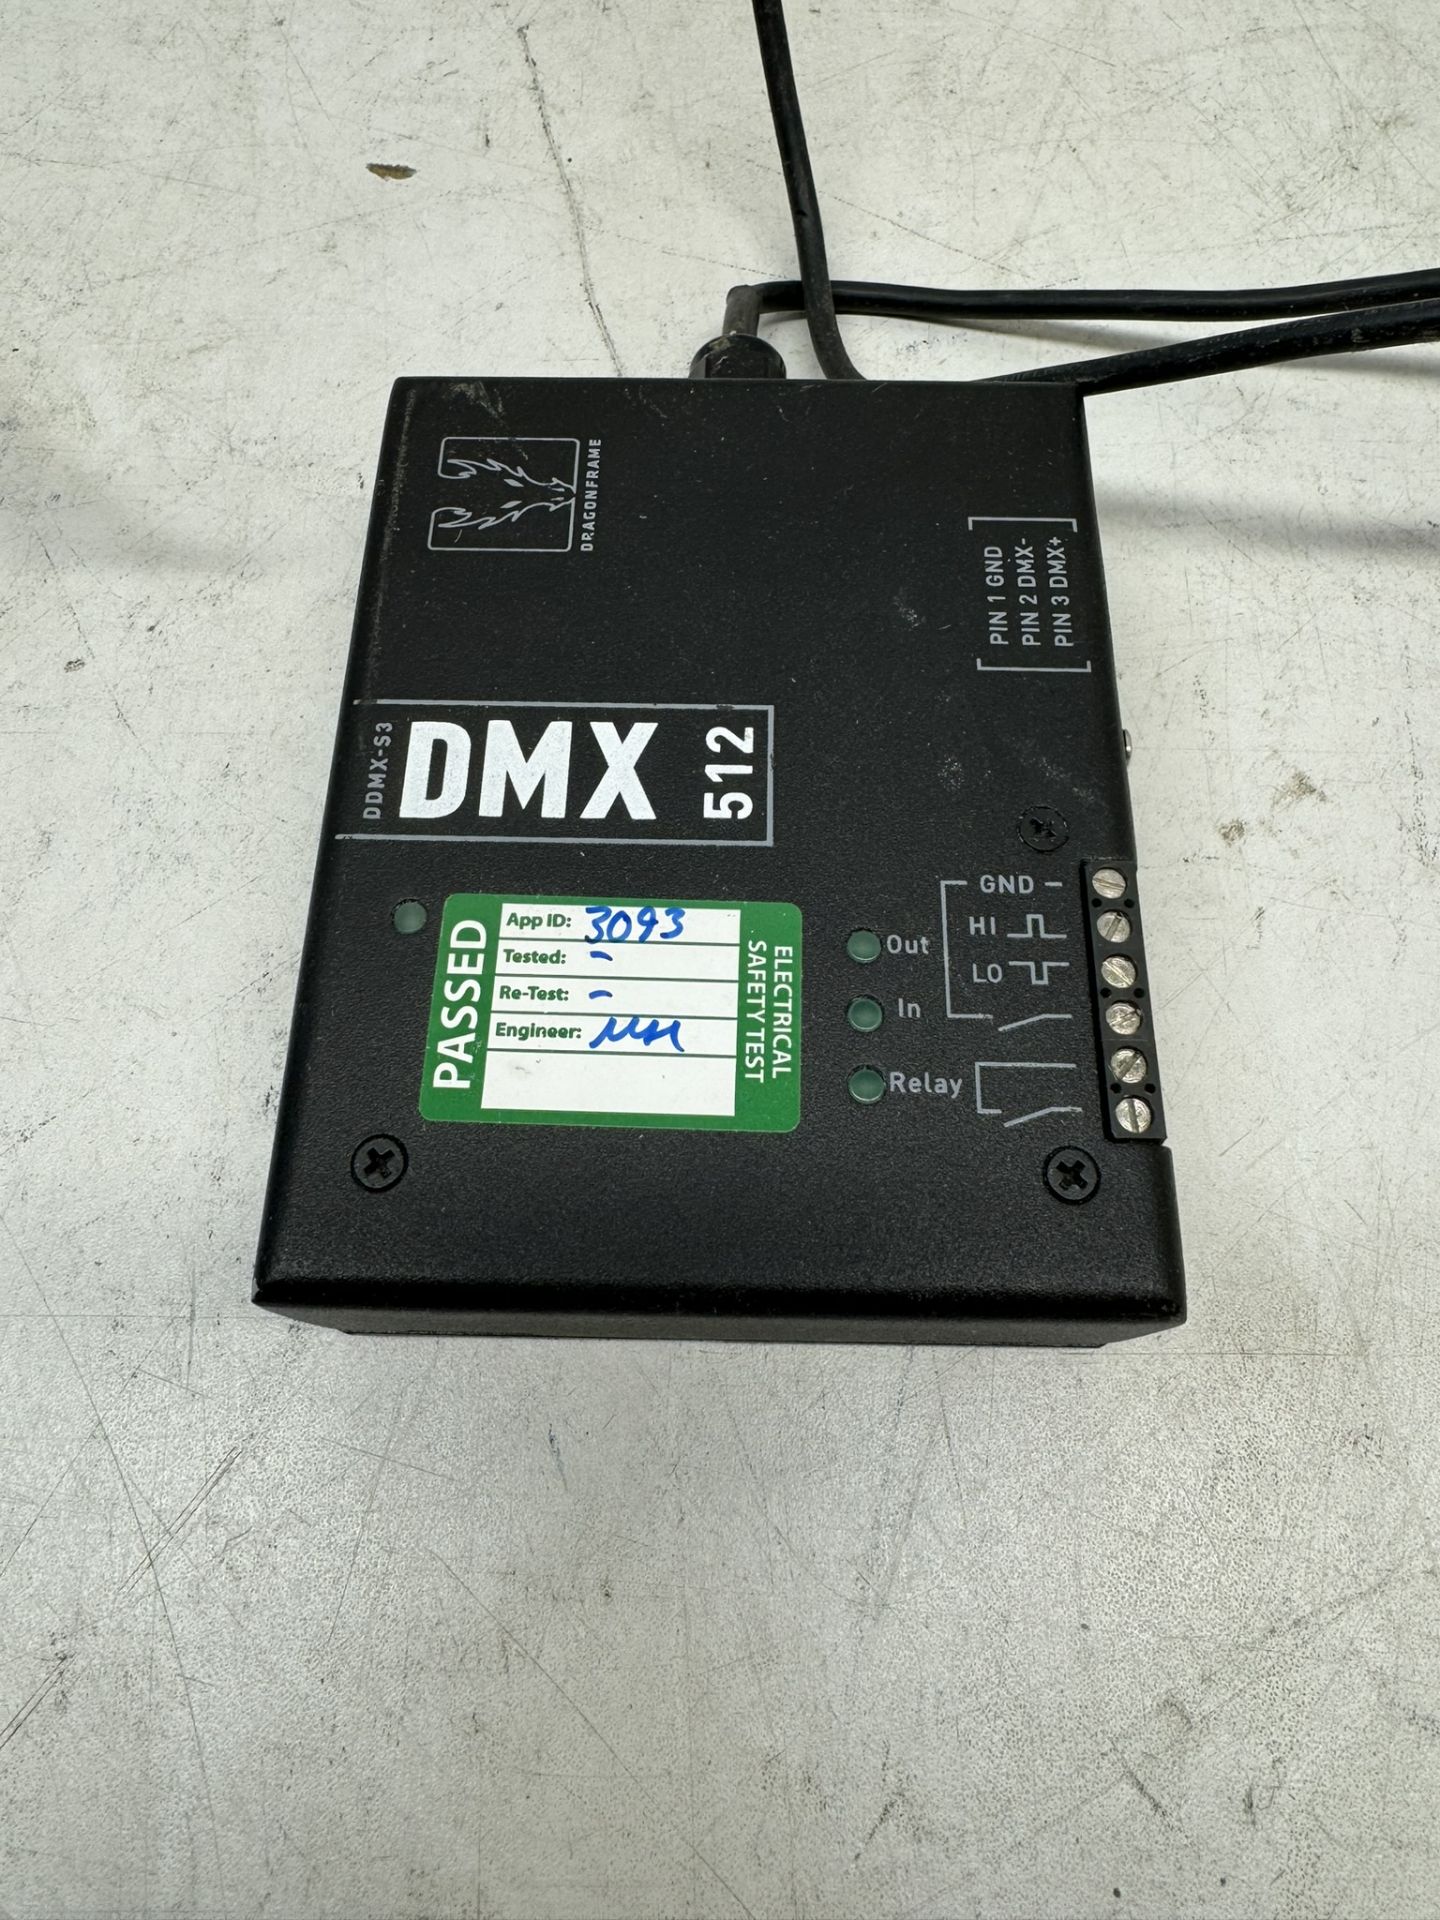 Dragonframe DMX 512 ADVANCED LIGHTING CONTROL